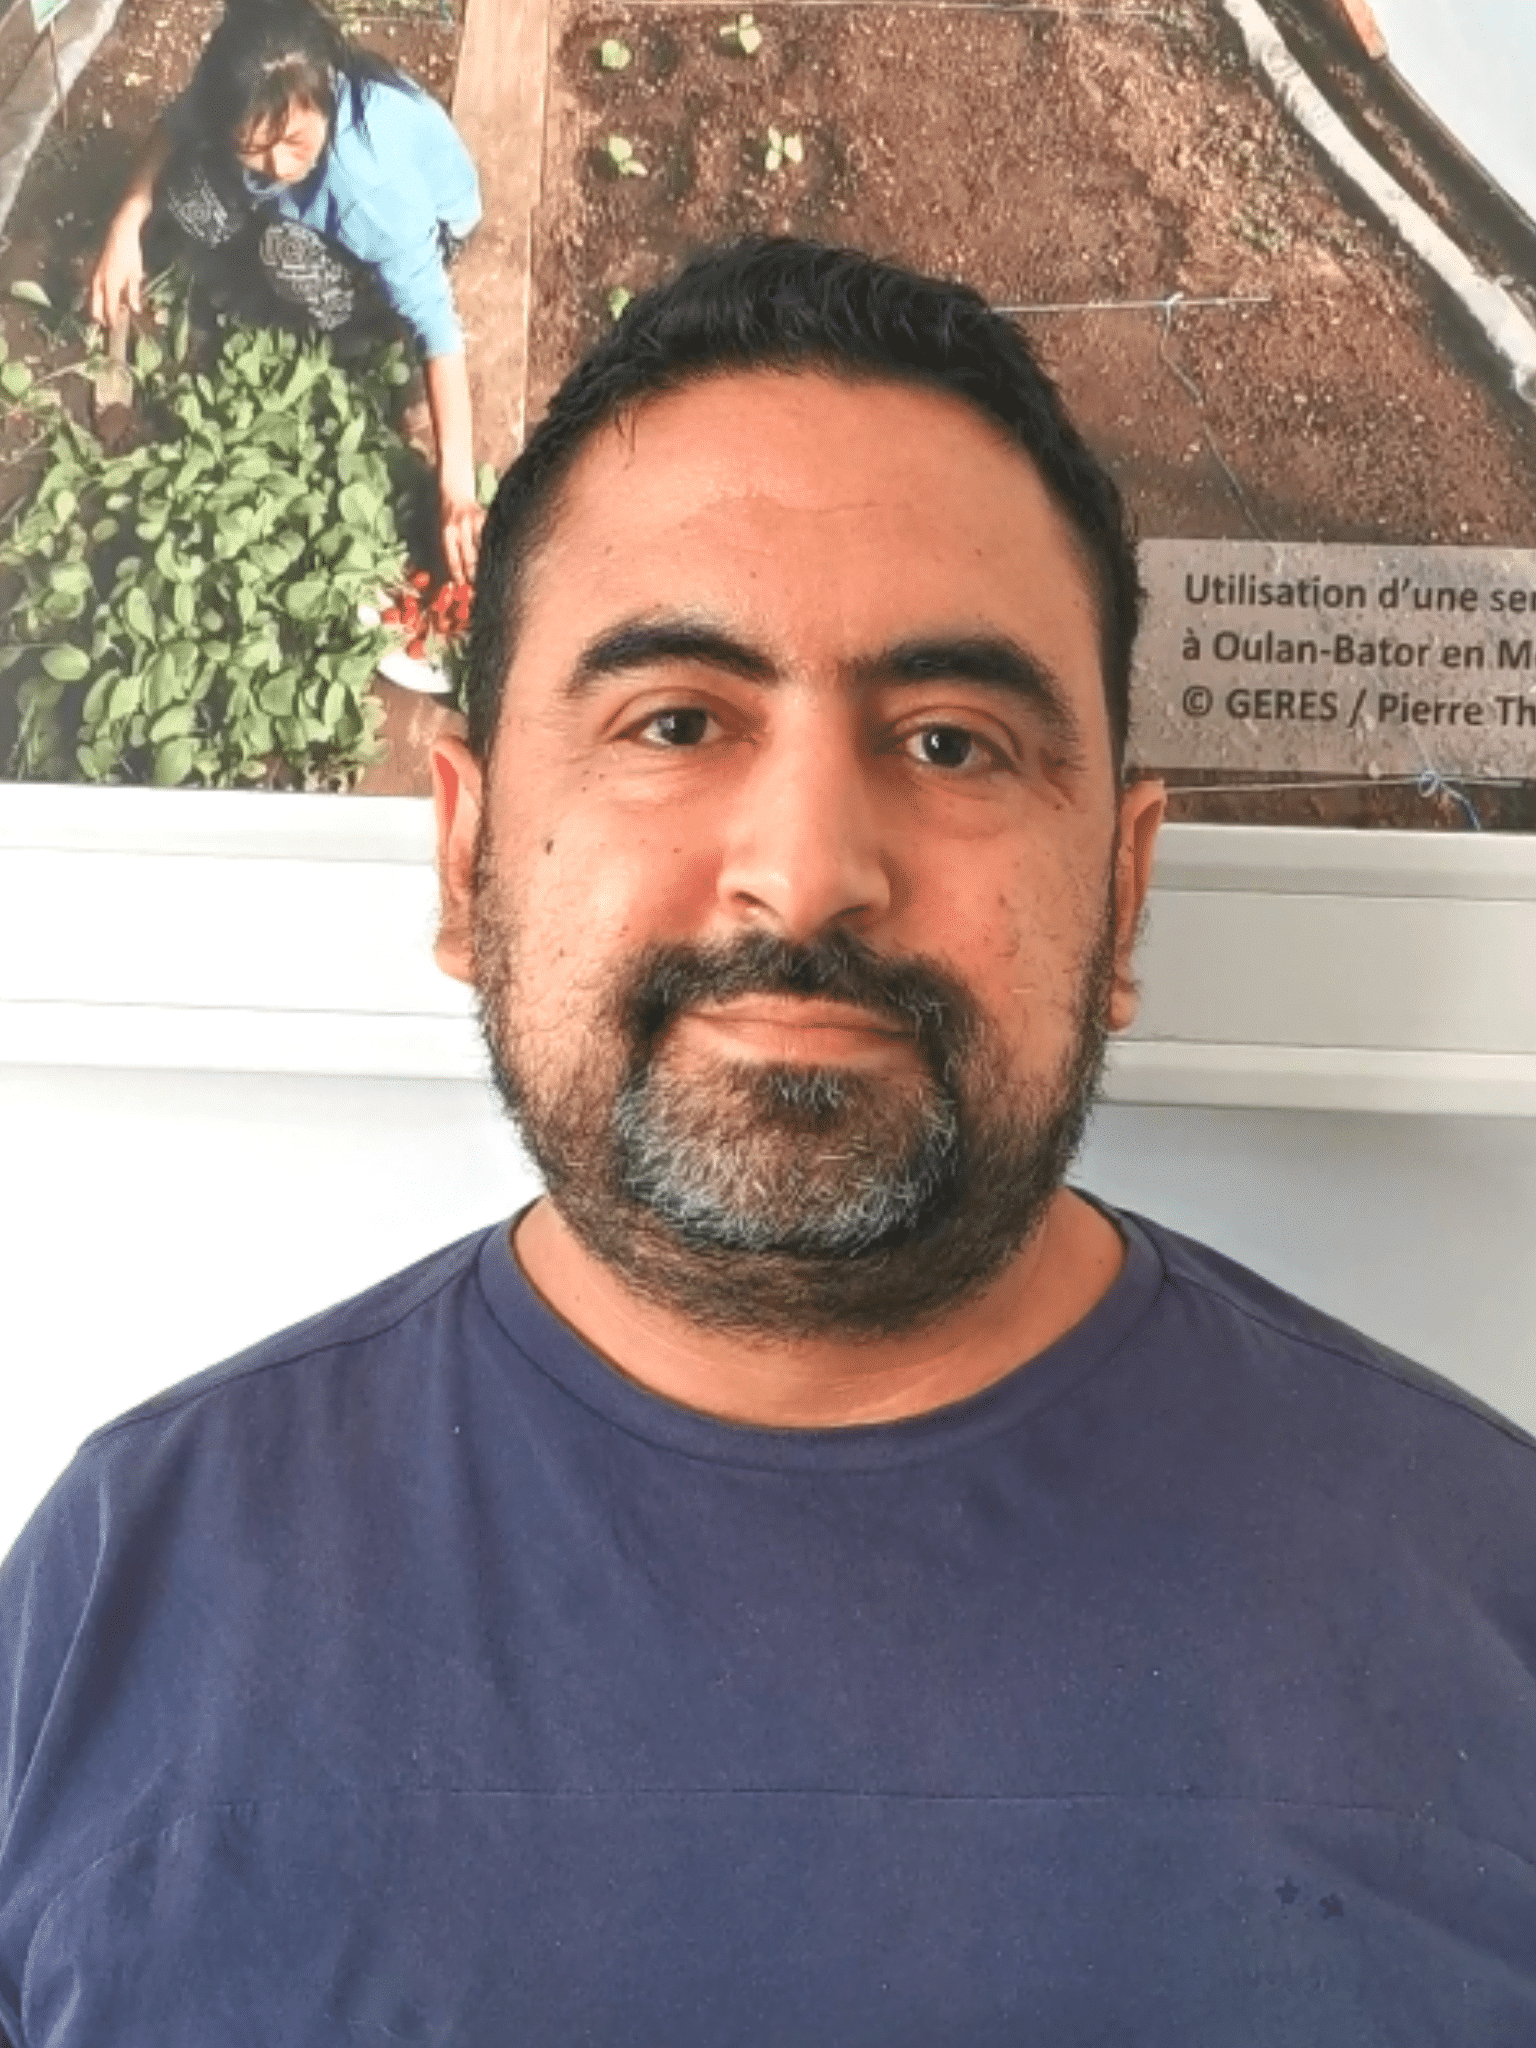 Kamel Sadki intervenant pour tugères